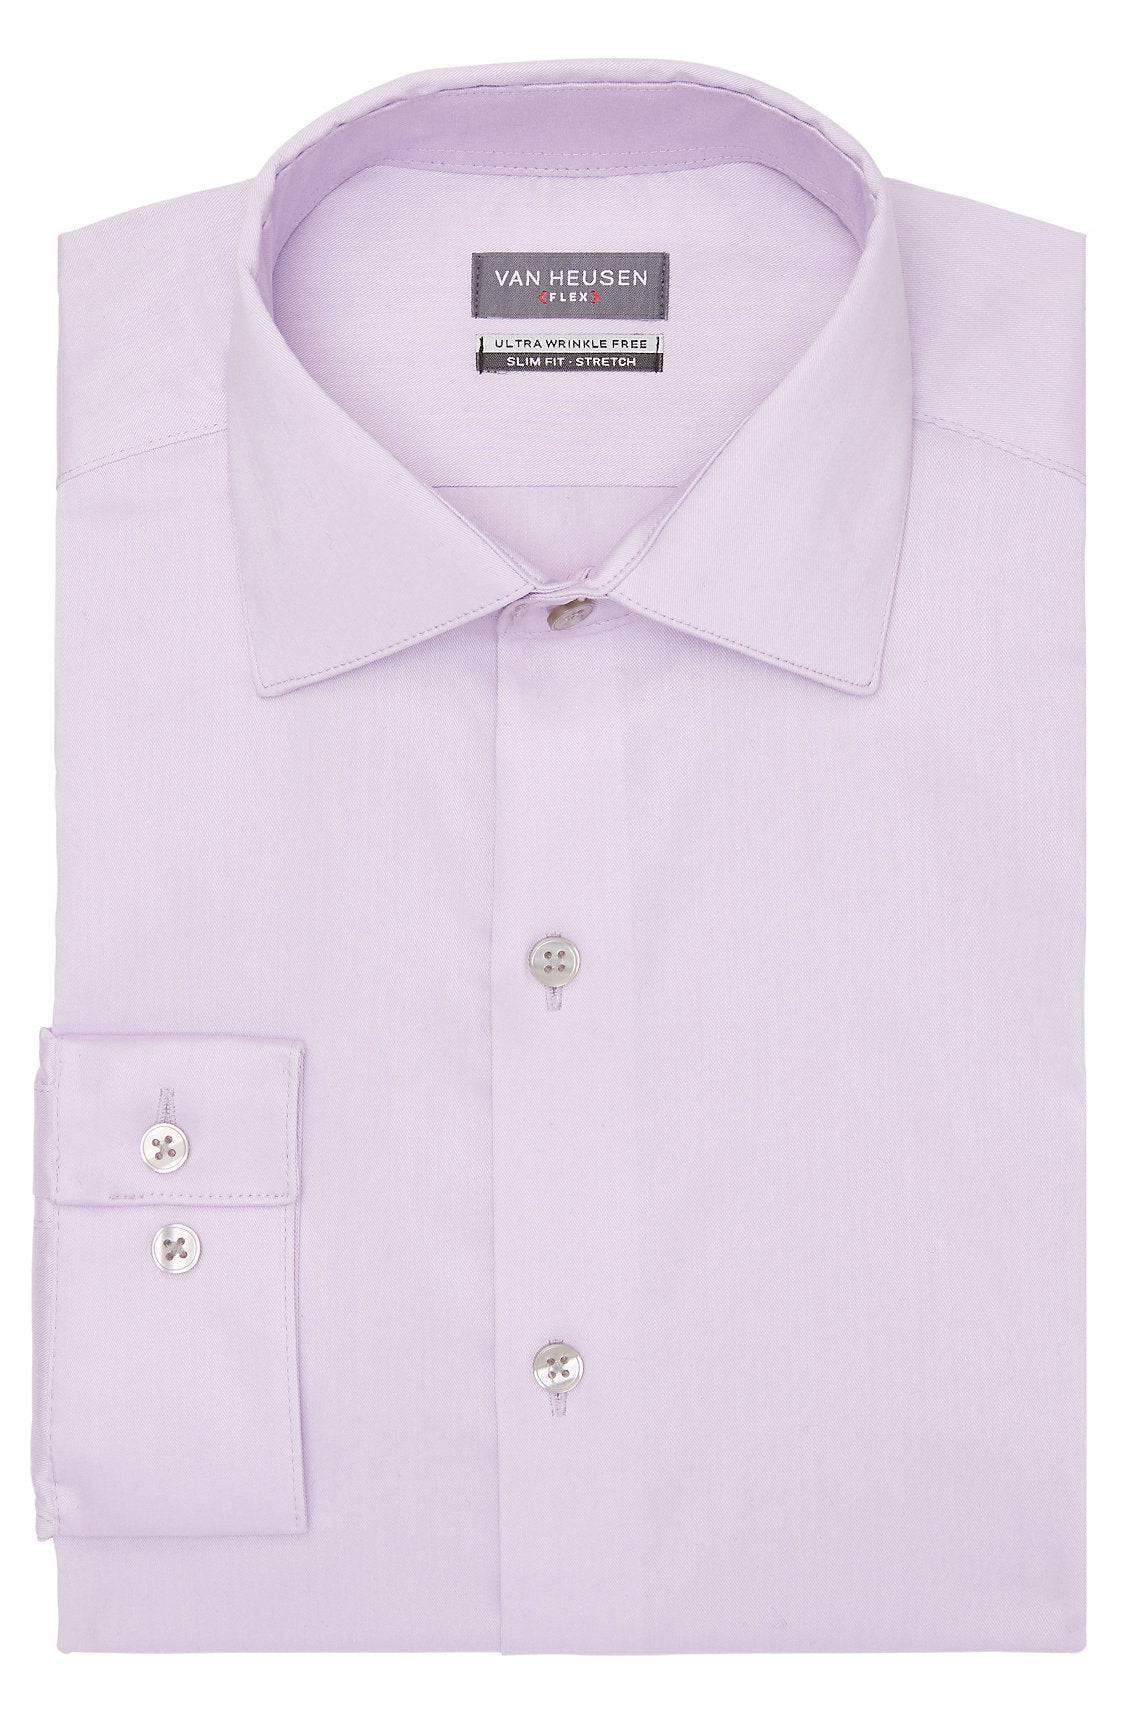 Van Heusen Slim Fit Ultra Wrinkle Free Stretch FLEX Solid Dress Shirt in Lavender - Rainwater's Men's Clothing and Tuxedo Rental